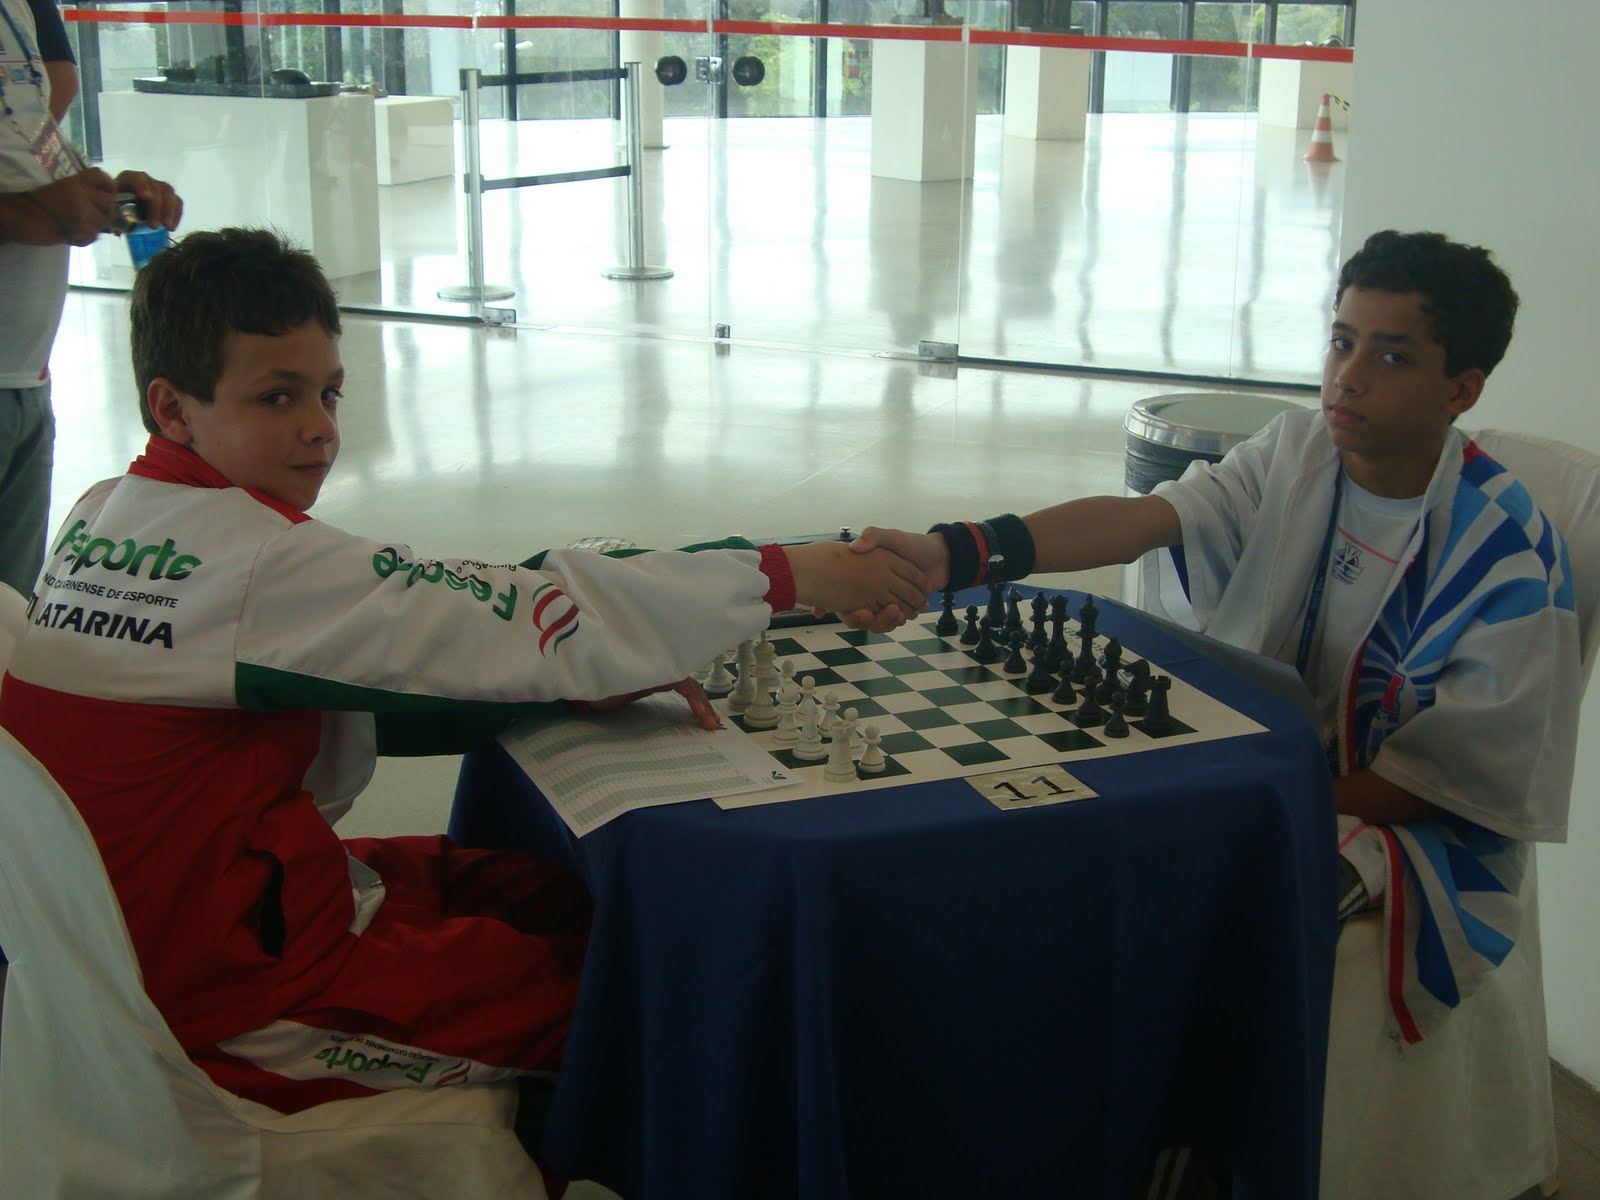 Campeonato de xadrez reunirá 1,5 mil alunos no Pacaembu - 25/06/2013 -  Folhinha - Folha de S.Paulo